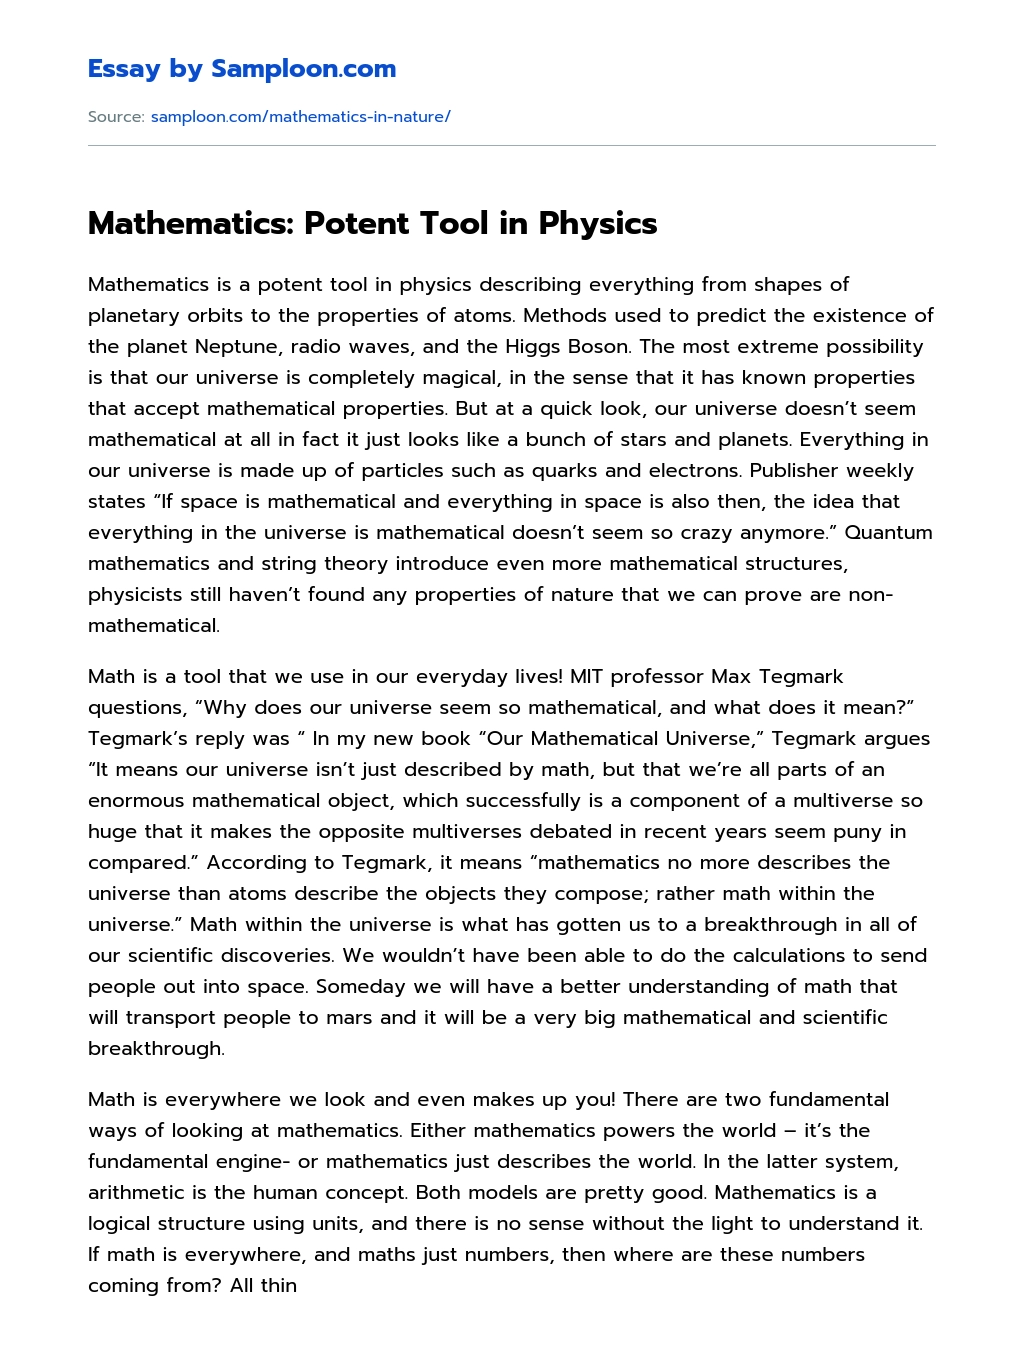 Mathematics: Potent Tool in Physics essay